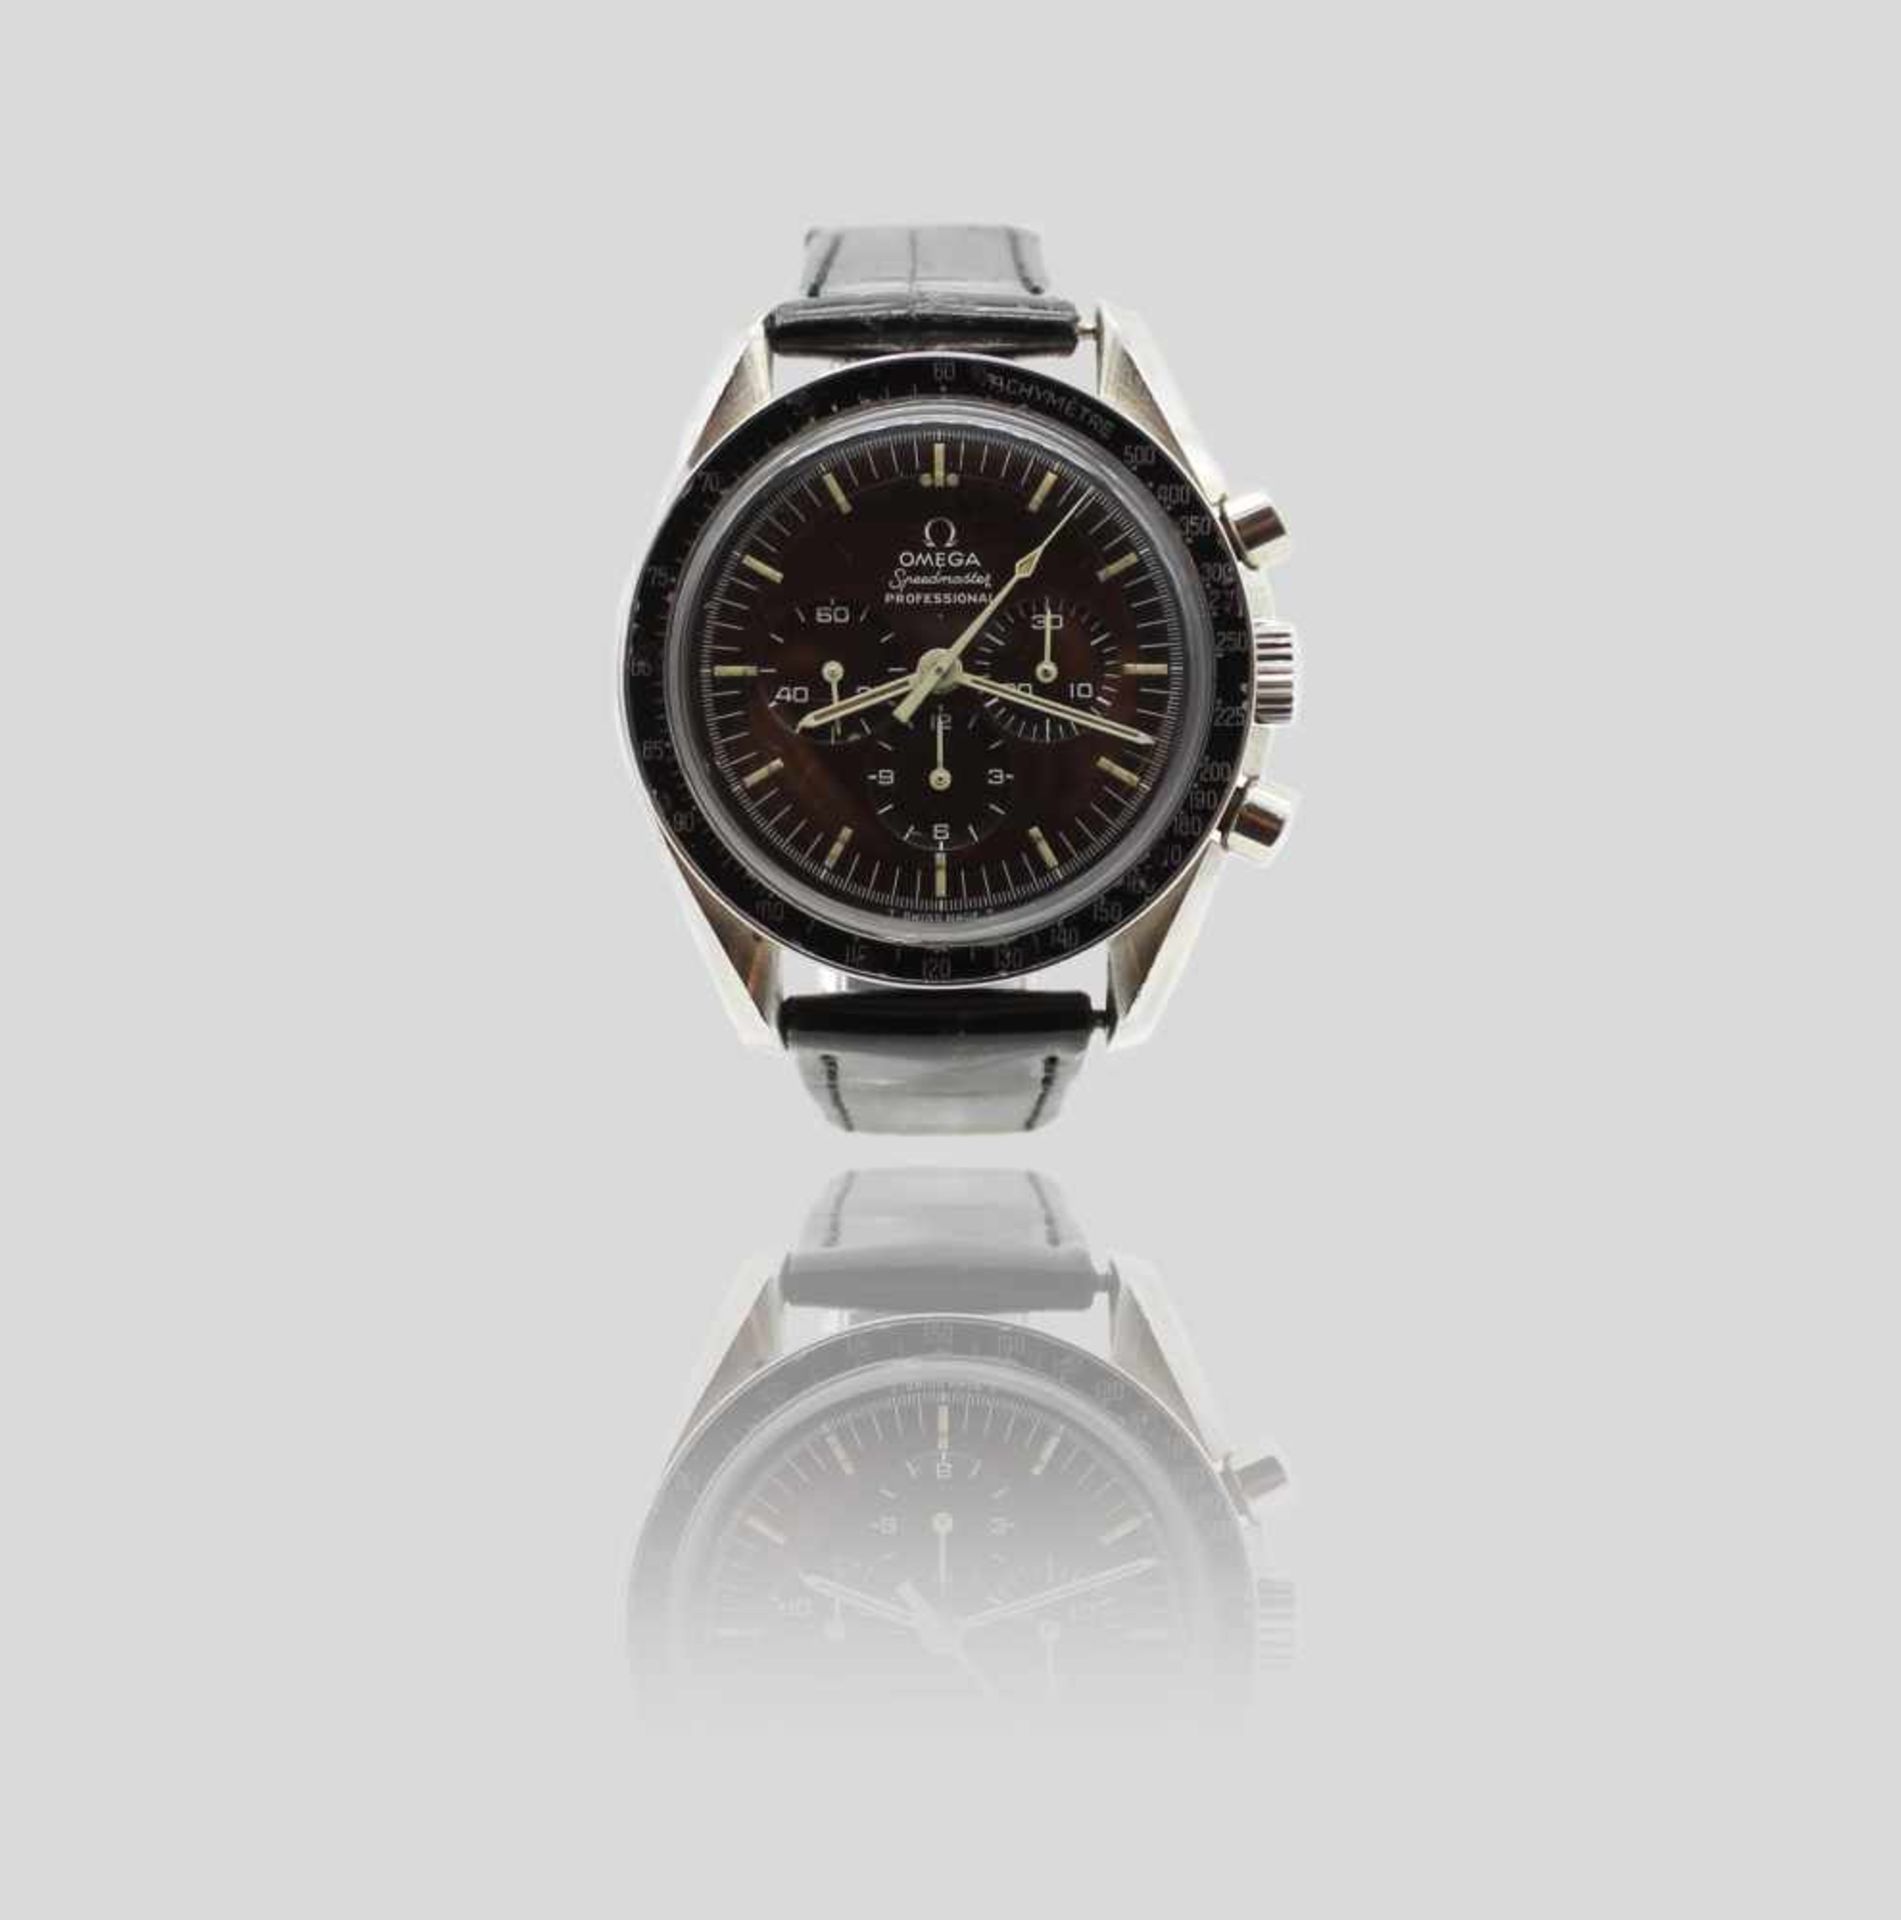 Omega Speedmaster Professional MoonwatchVintage Herrenarmbanduhr aus den 60er Jahren. Handaufzug, 42